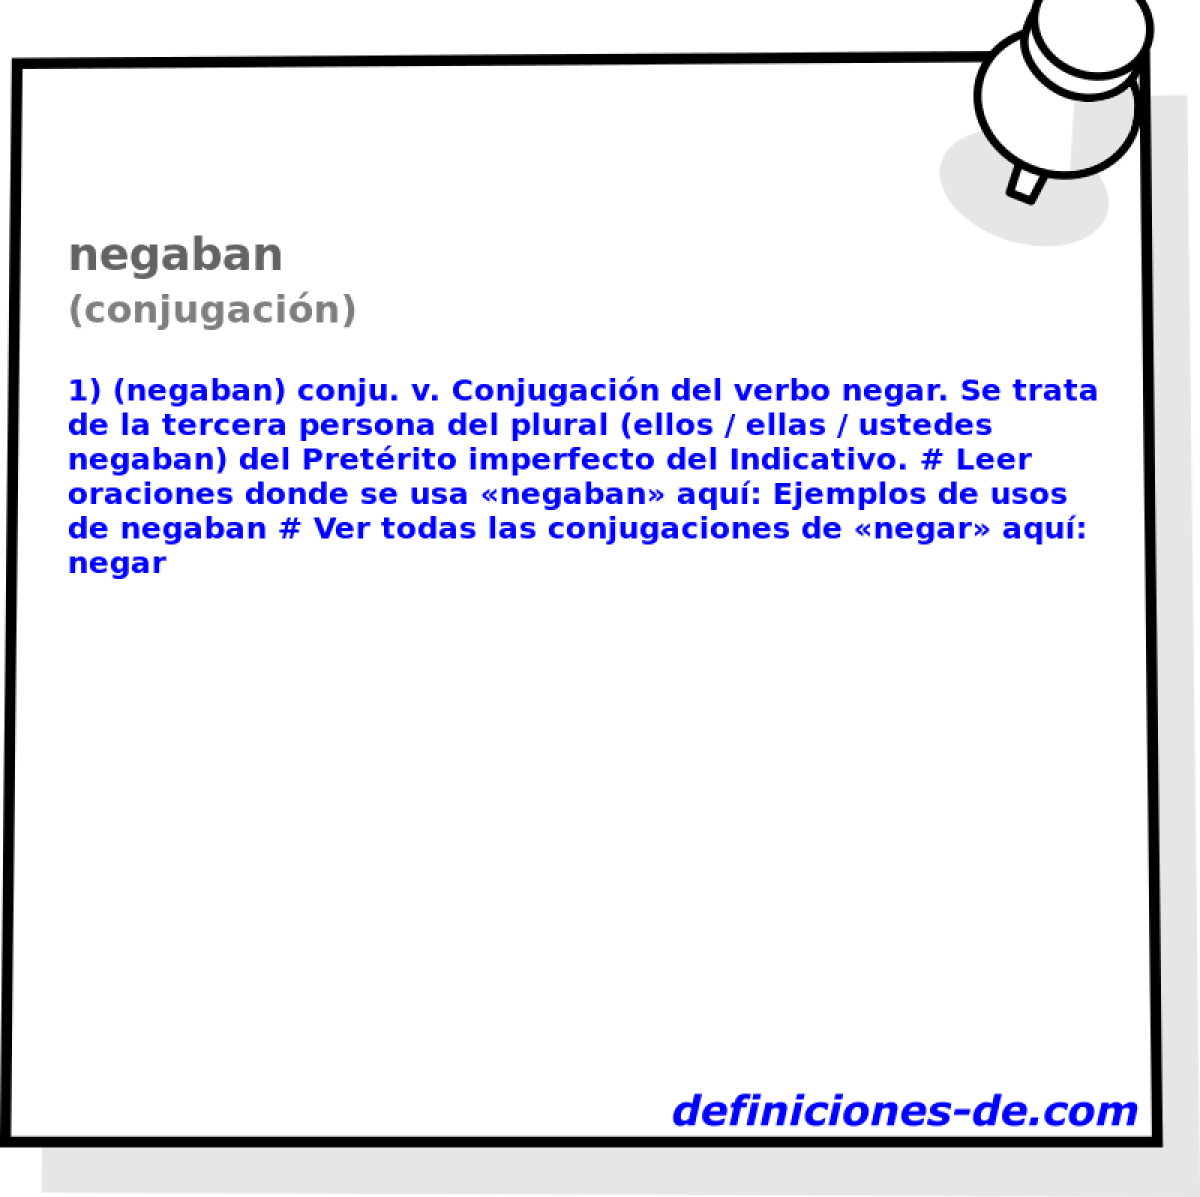 negaban (conjugacin)